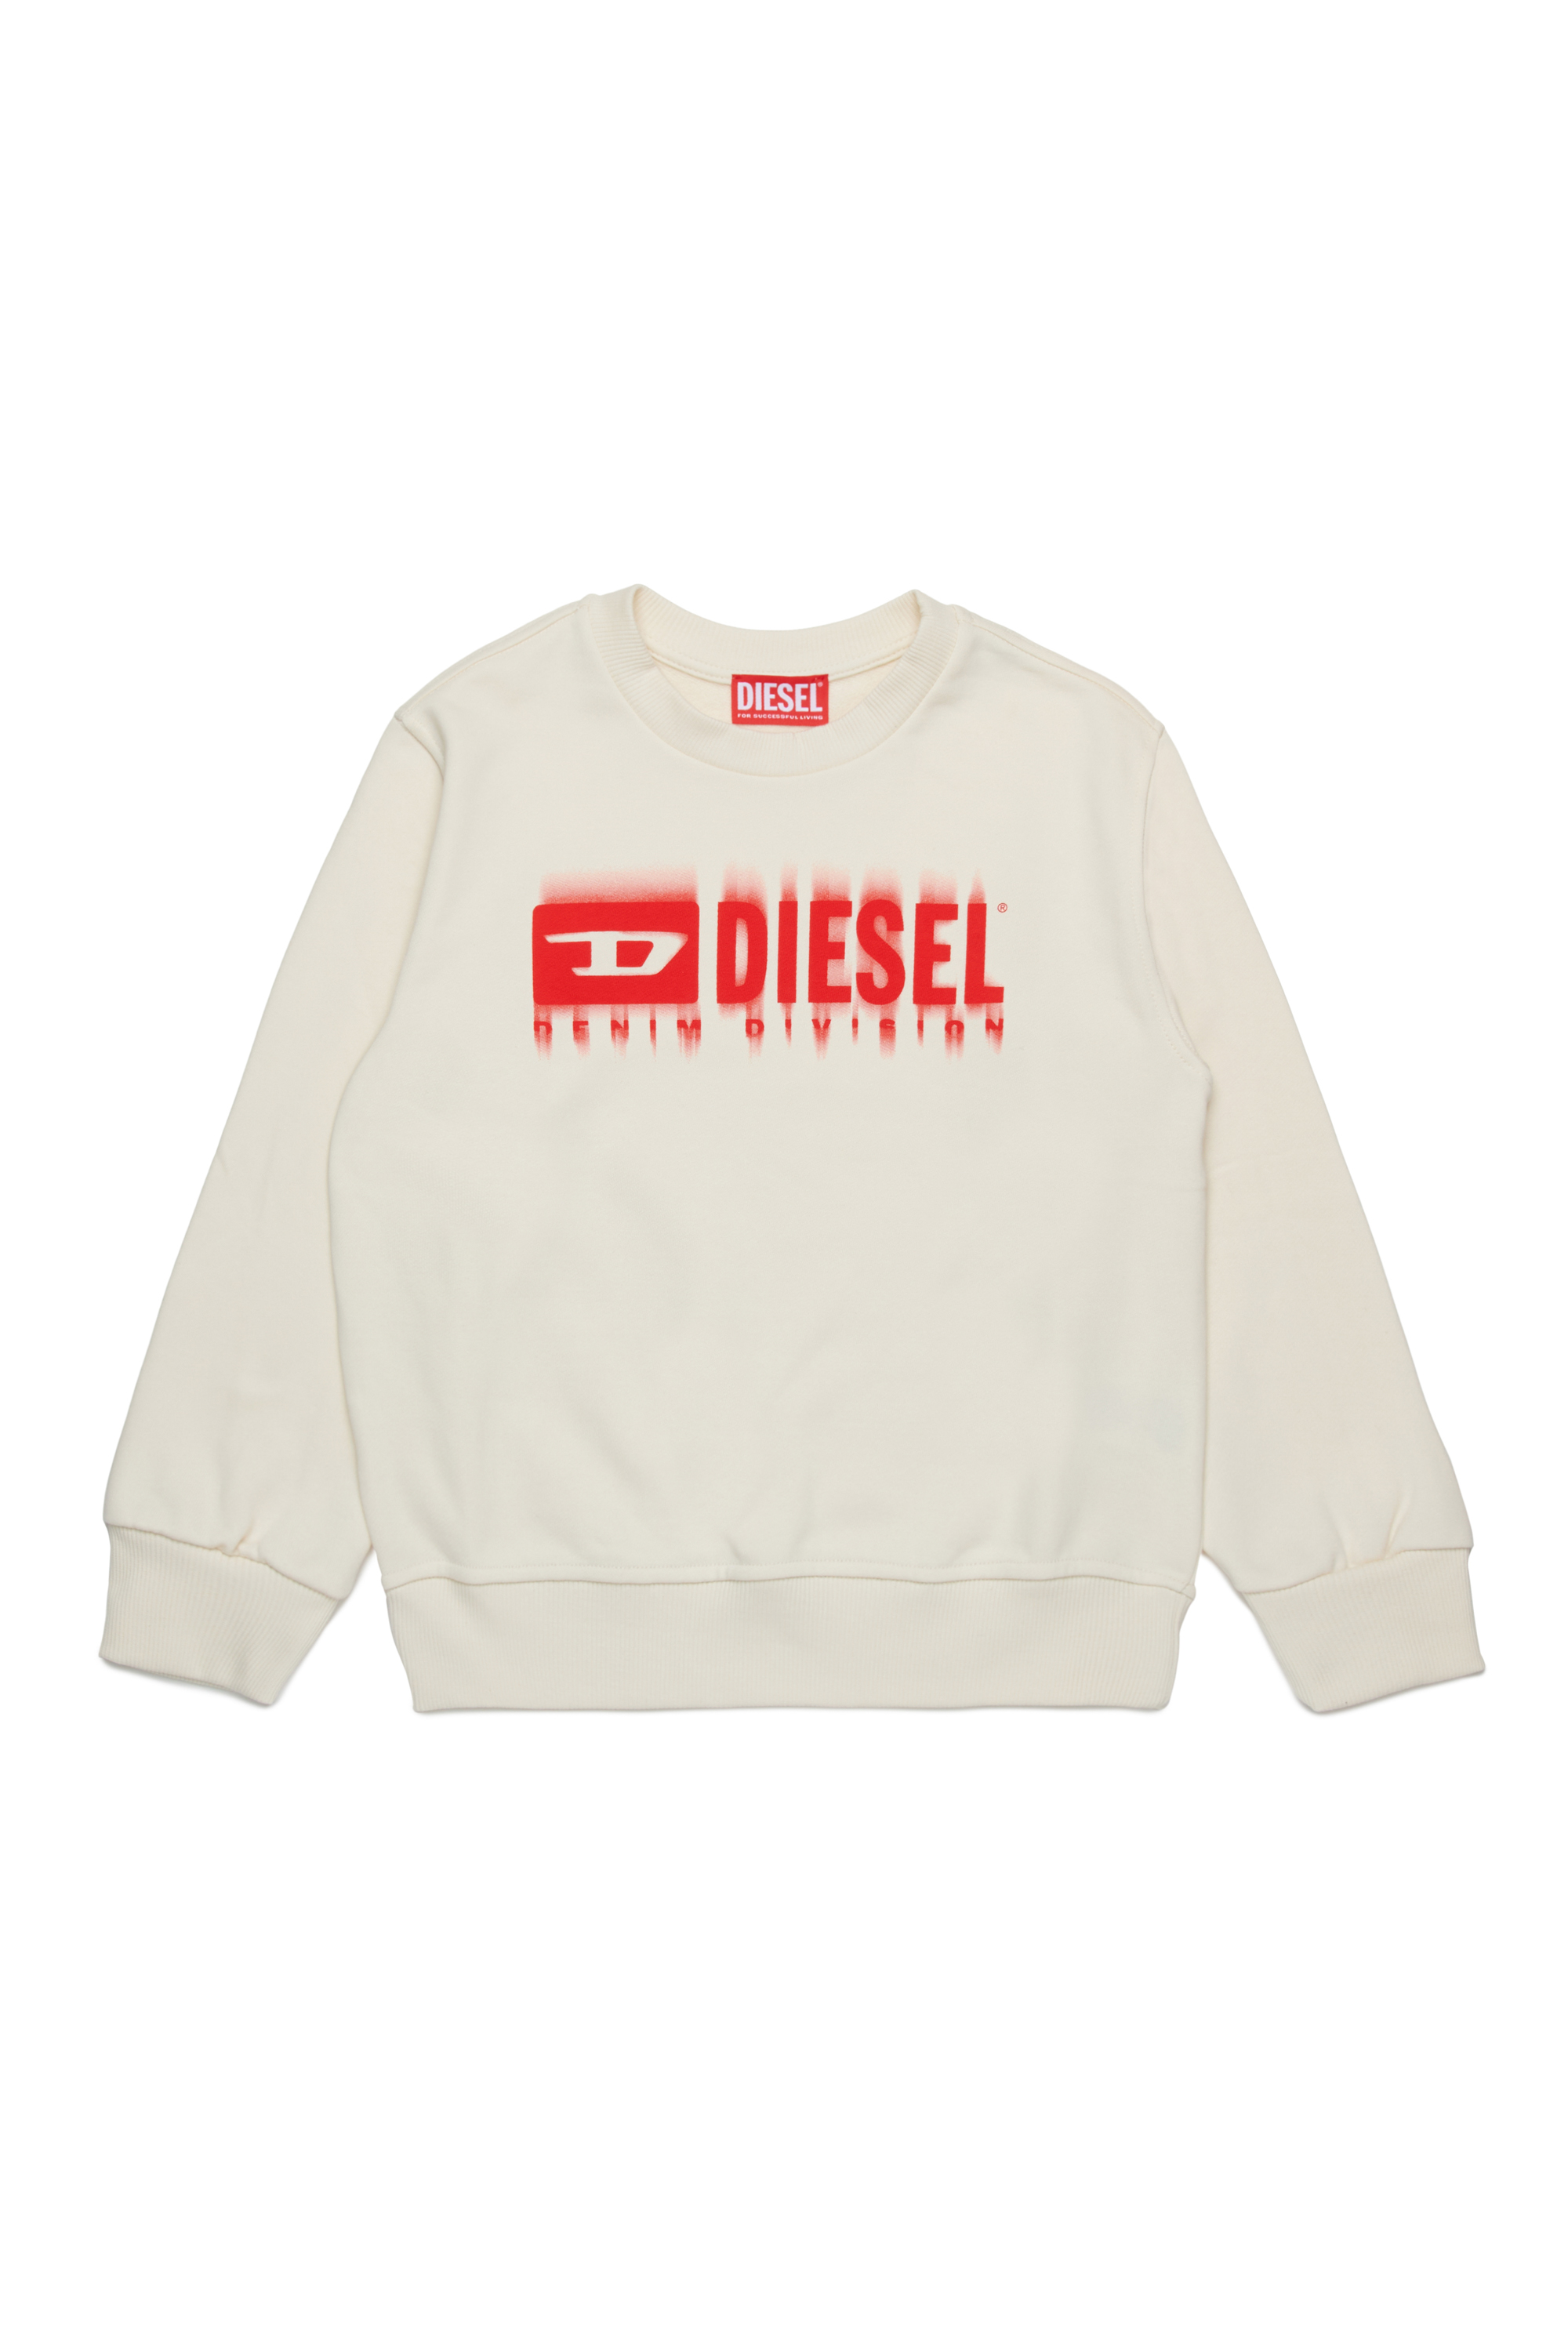 Diesel - SGINNL8 OVER, Homme Sweat-shirt avec logo taché in Blanc - Image 1